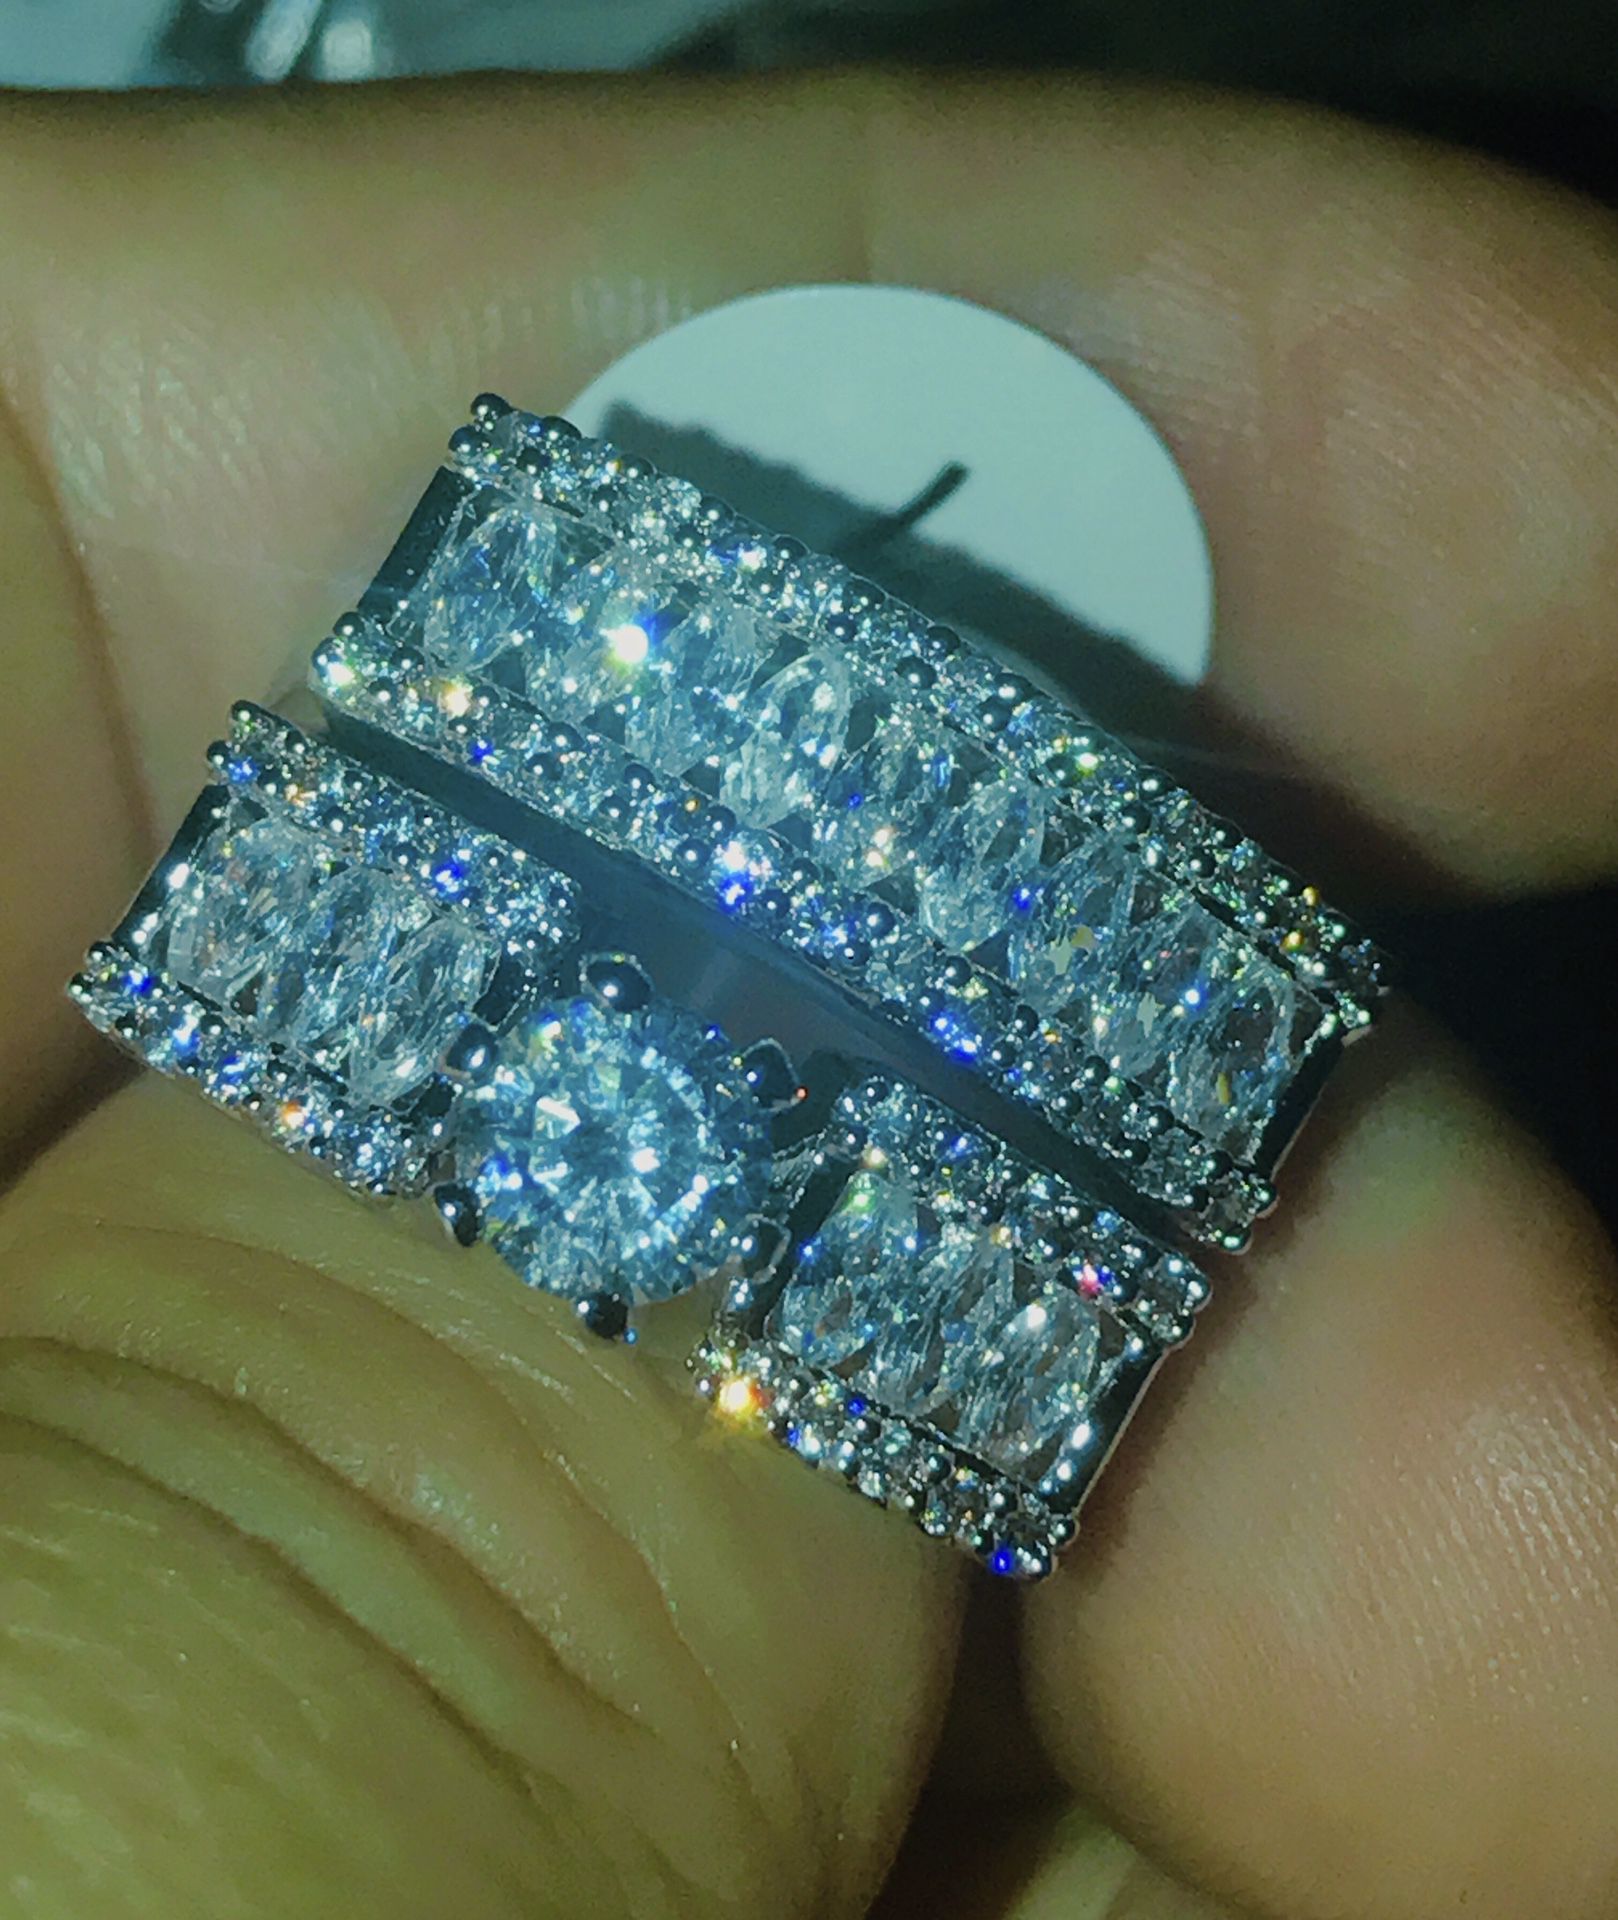 18k White gold filled CZ wedding engagement ring size 7+ box